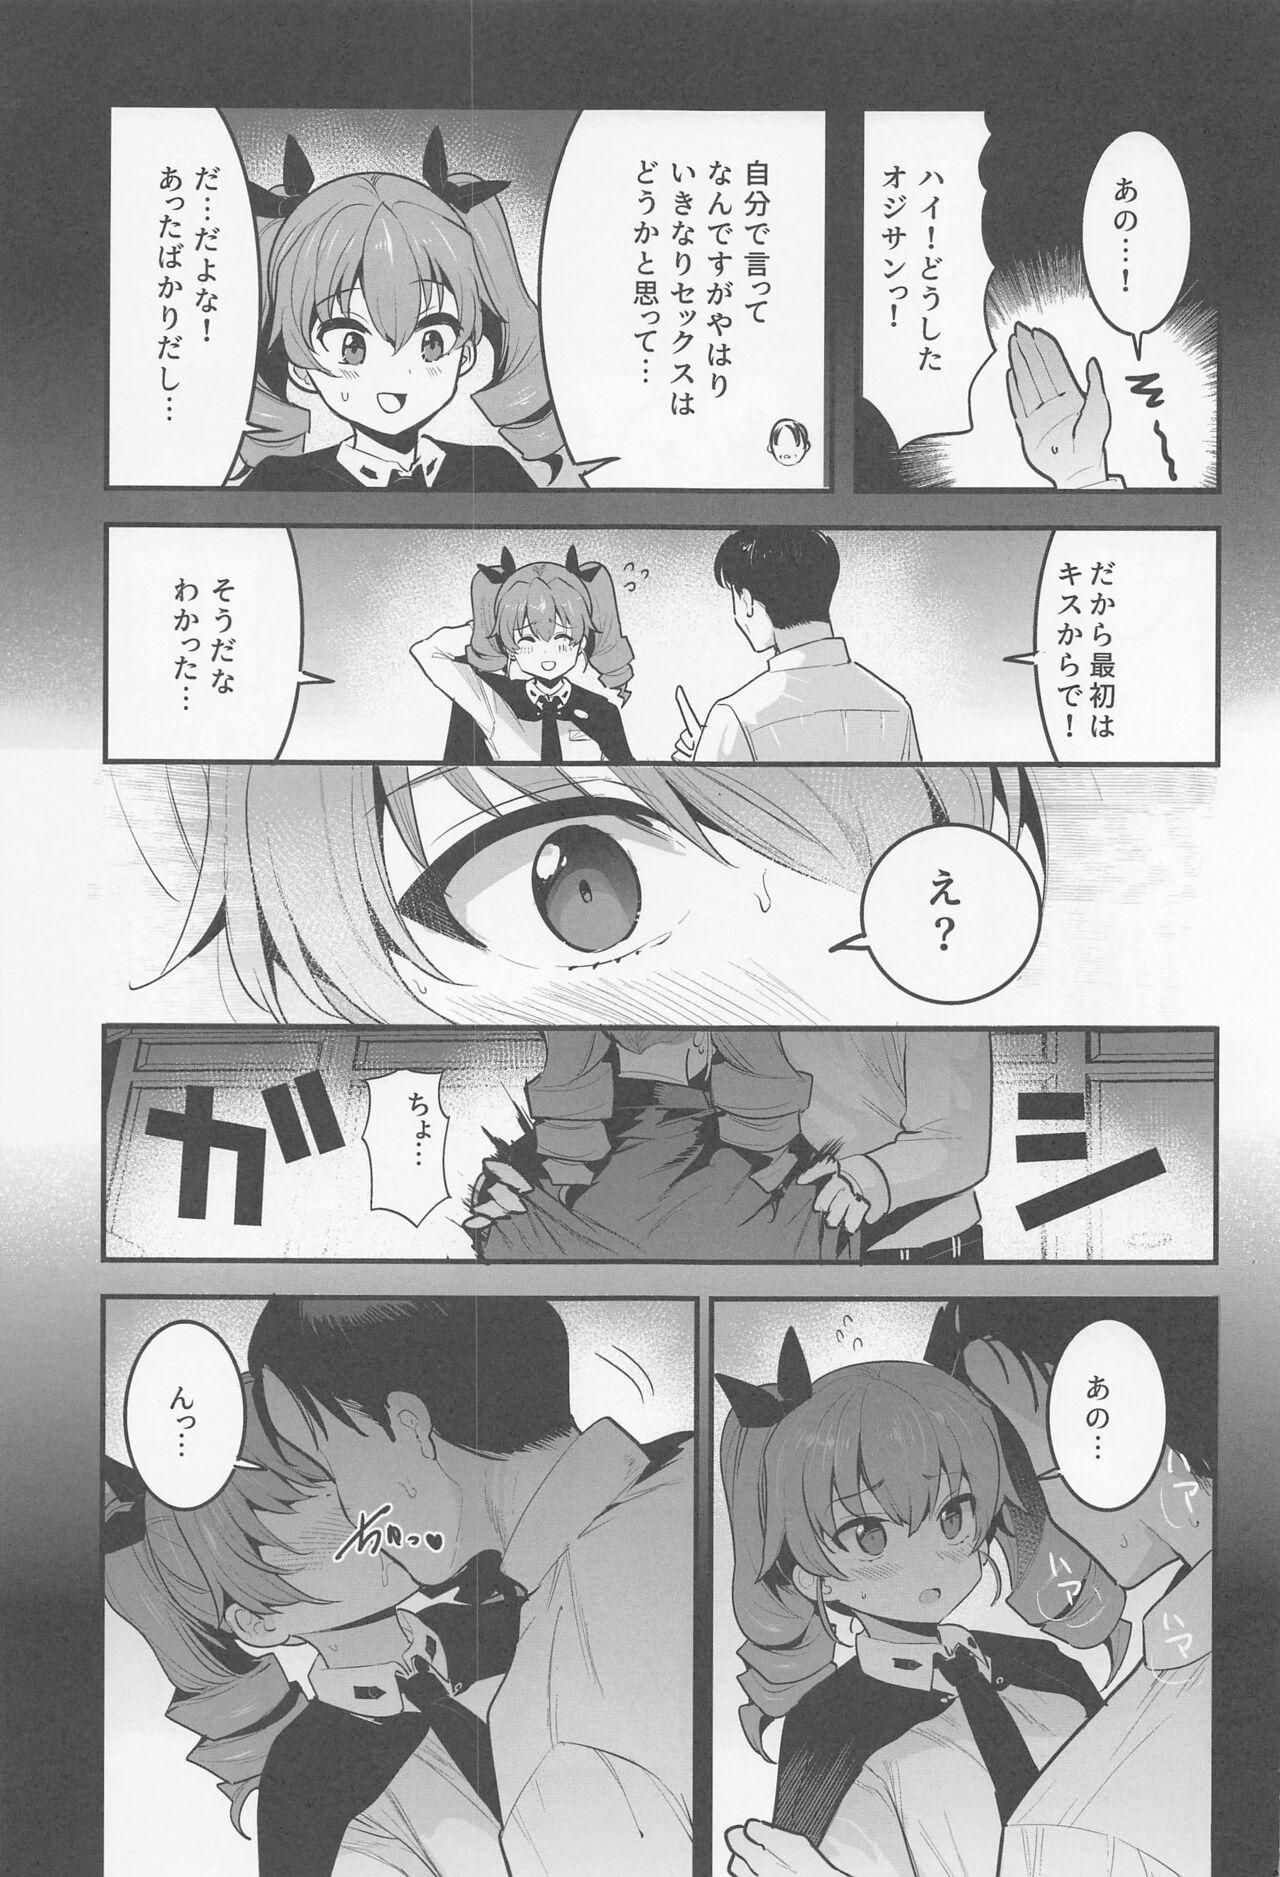 Letsdoeit anchobi dogezadeonegaishitaraippatsuyarasetekuremashita - Girls und panzer Nerd - Page 4